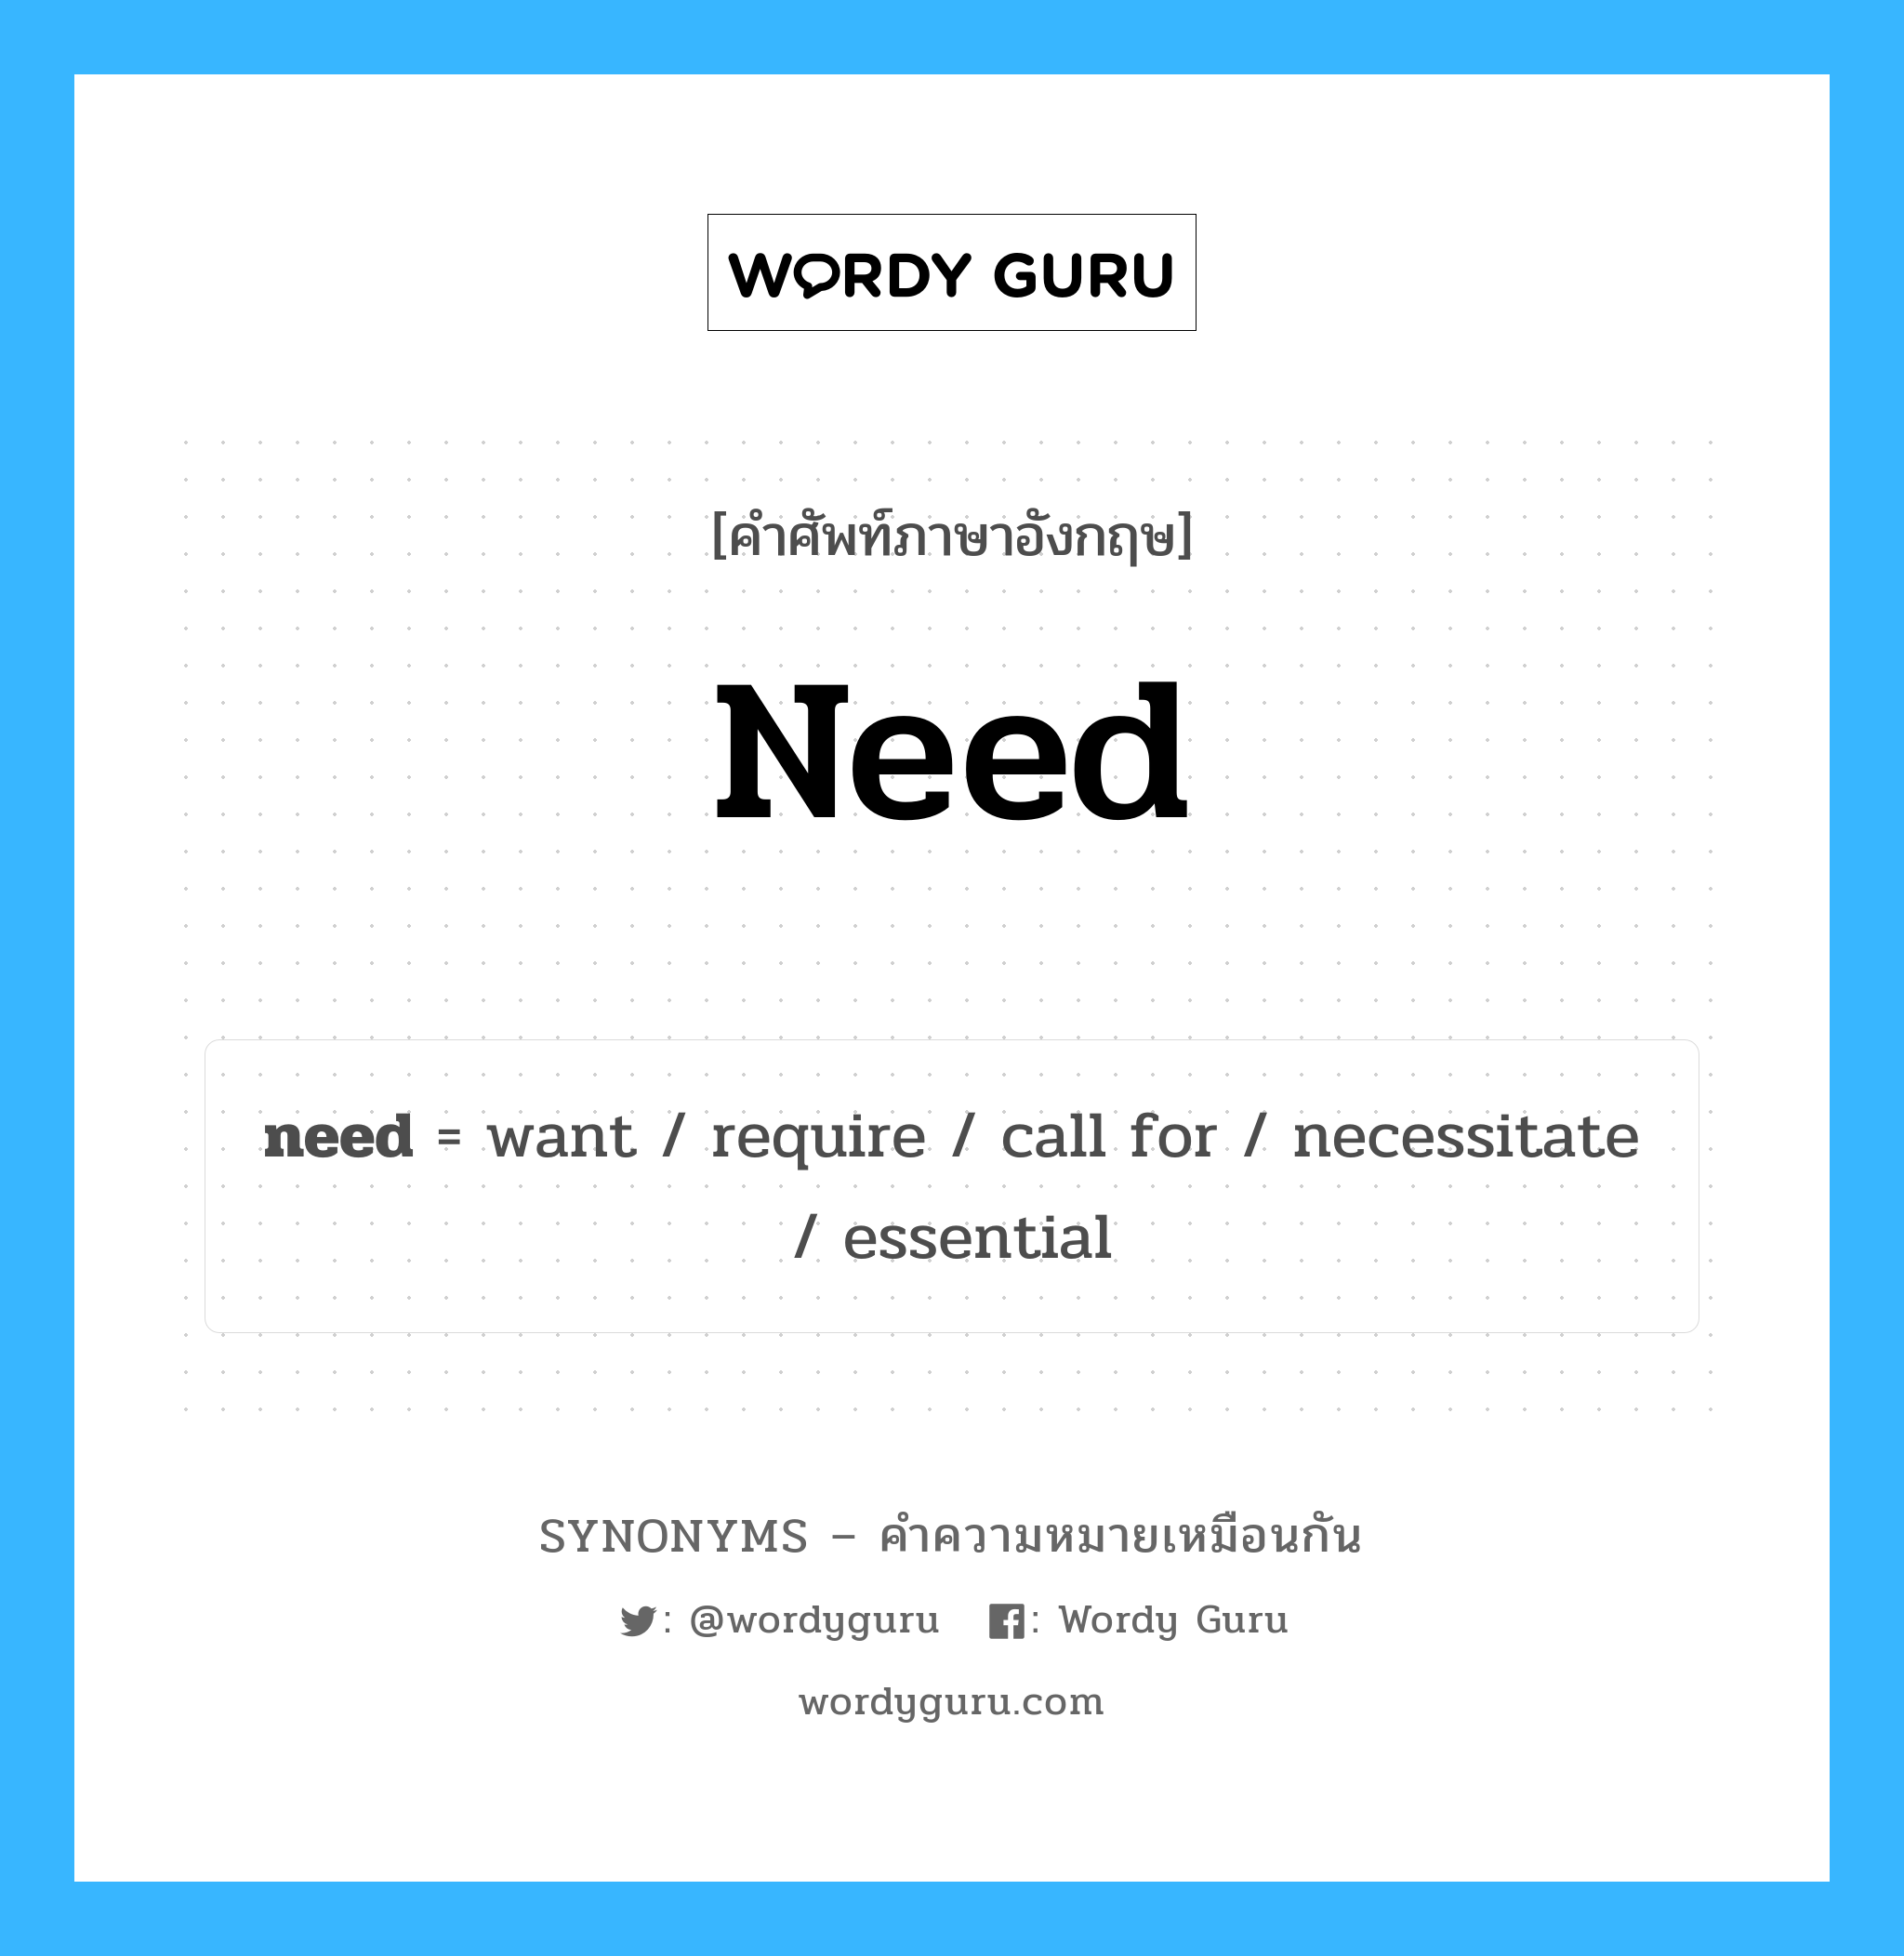 necessitate เป็นหนึ่งใน need และมีคำอื่น ๆ อีกดังนี้, คำศัพท์ภาษาอังกฤษ necessitate ความหมายคล้ายกันกับ need แปลว่า ผนวก หมวด need